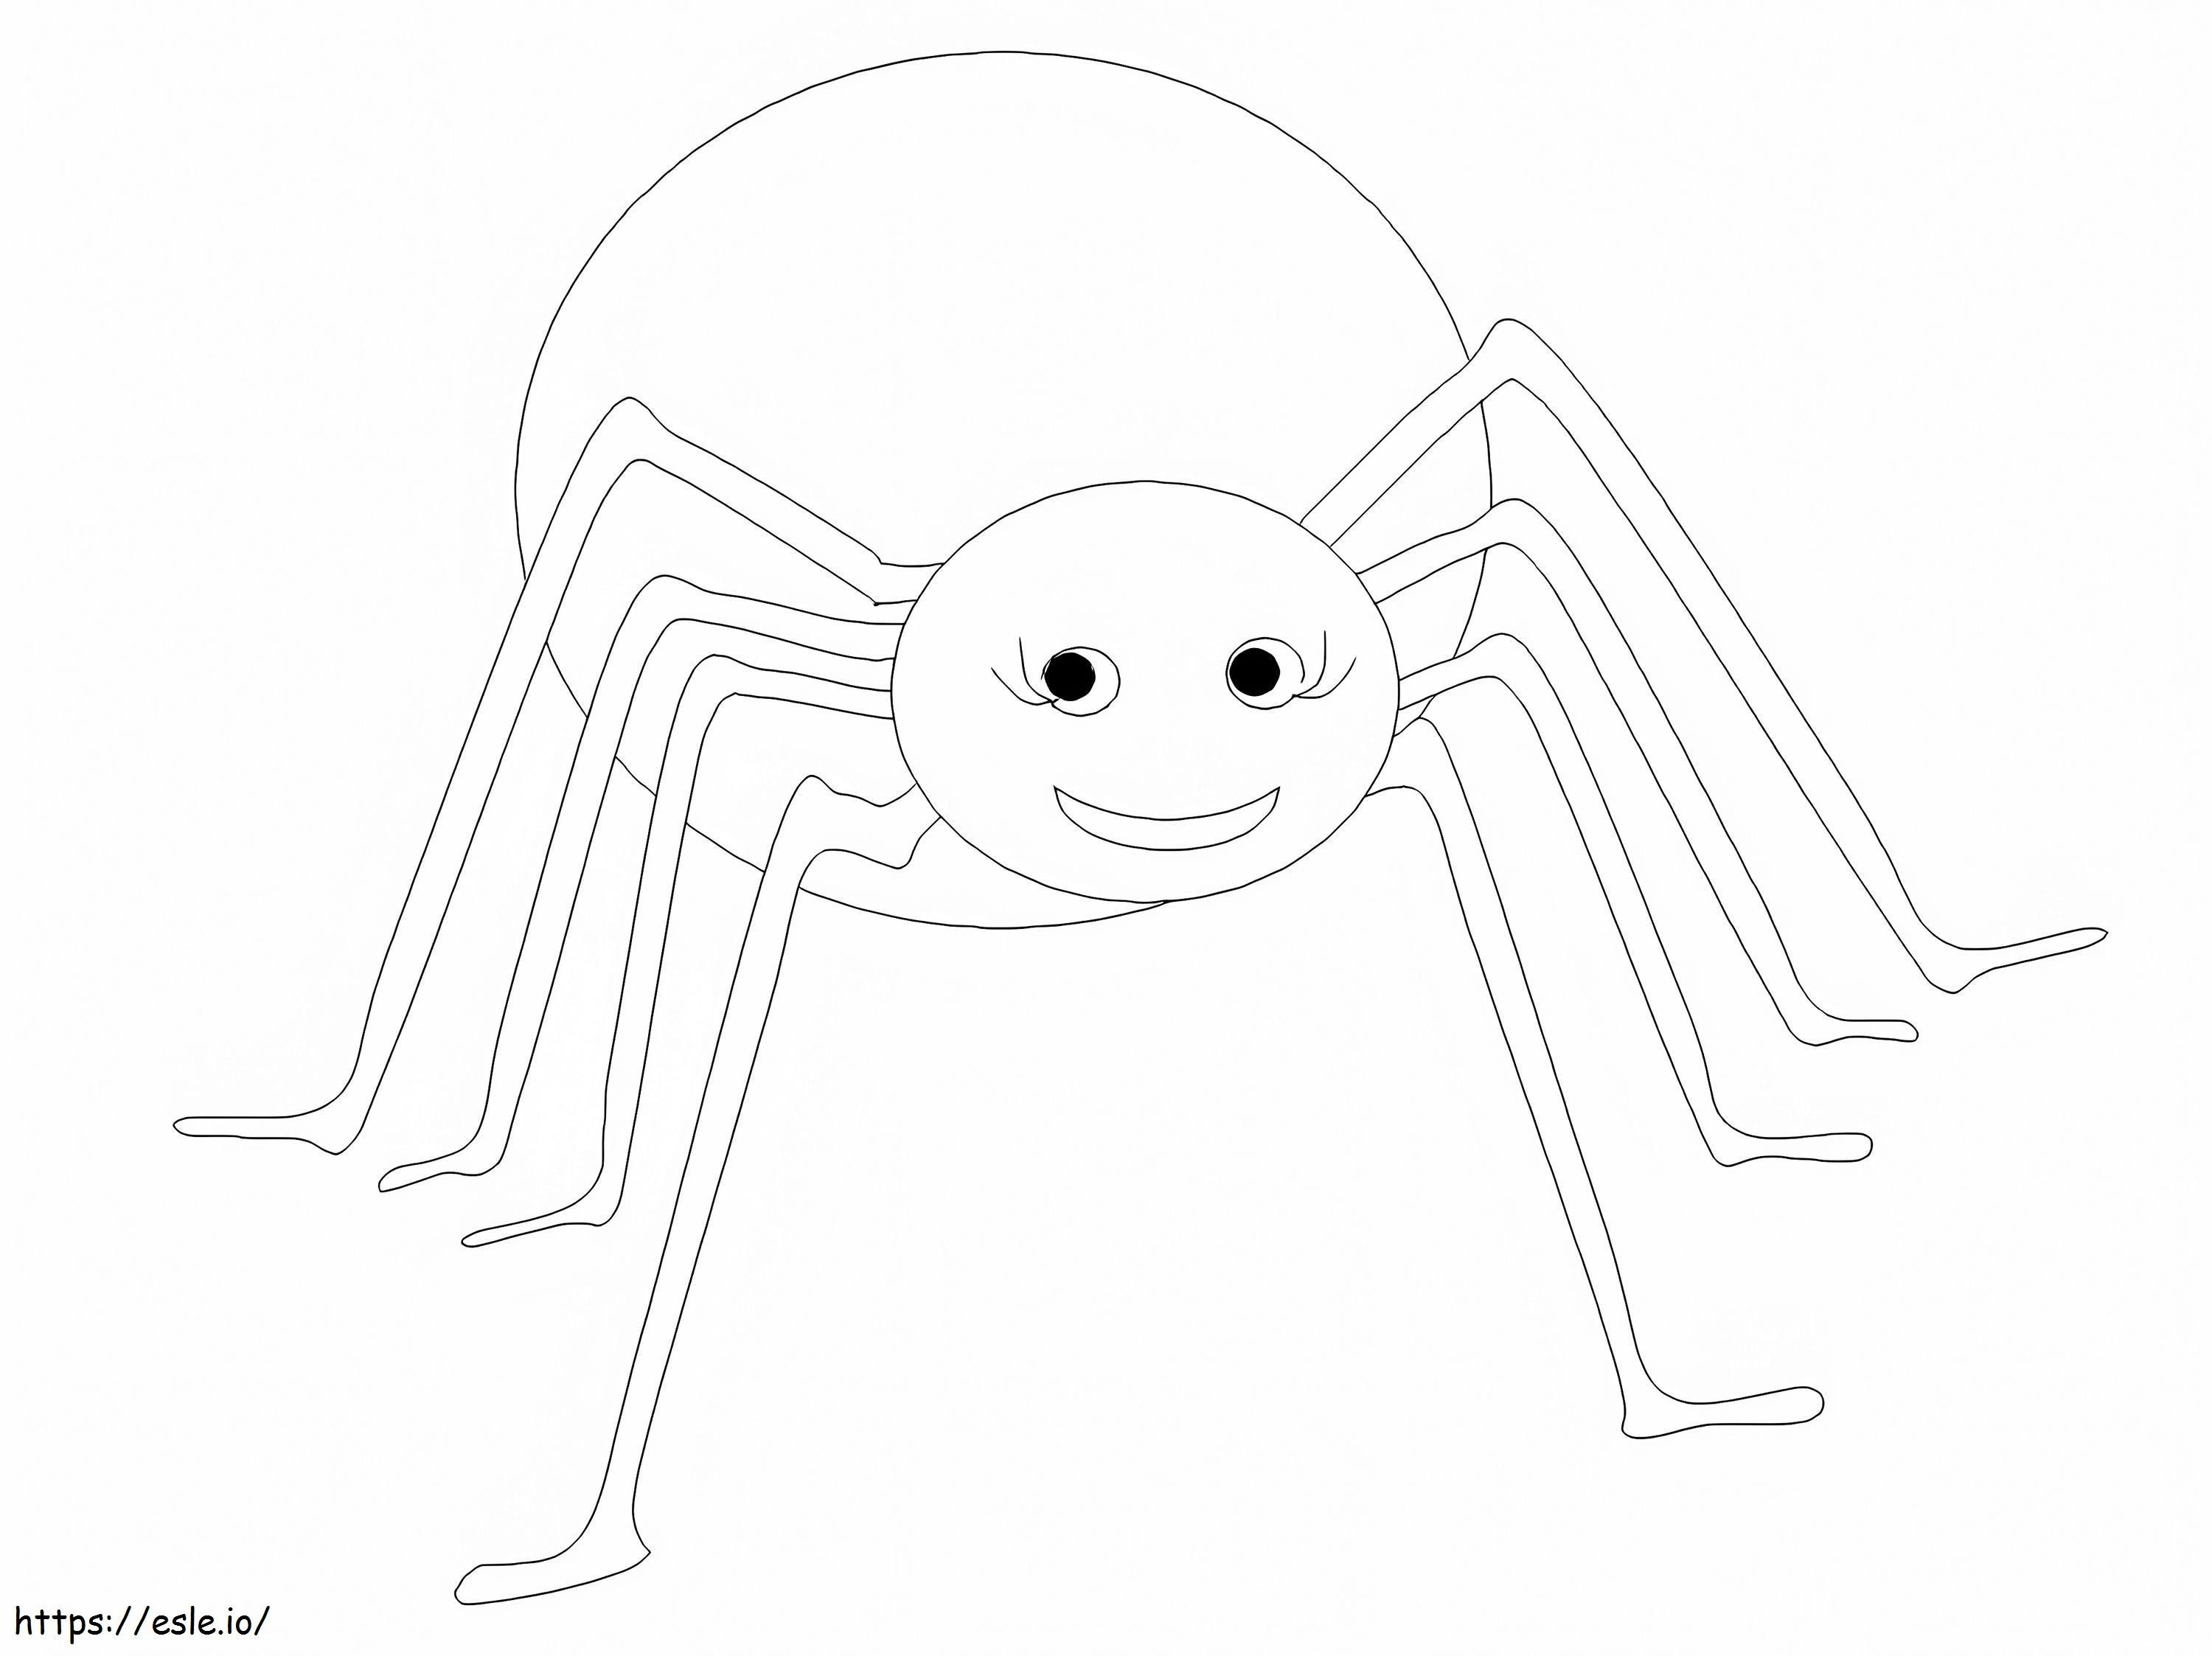 Spinne 7 ausmalbilder